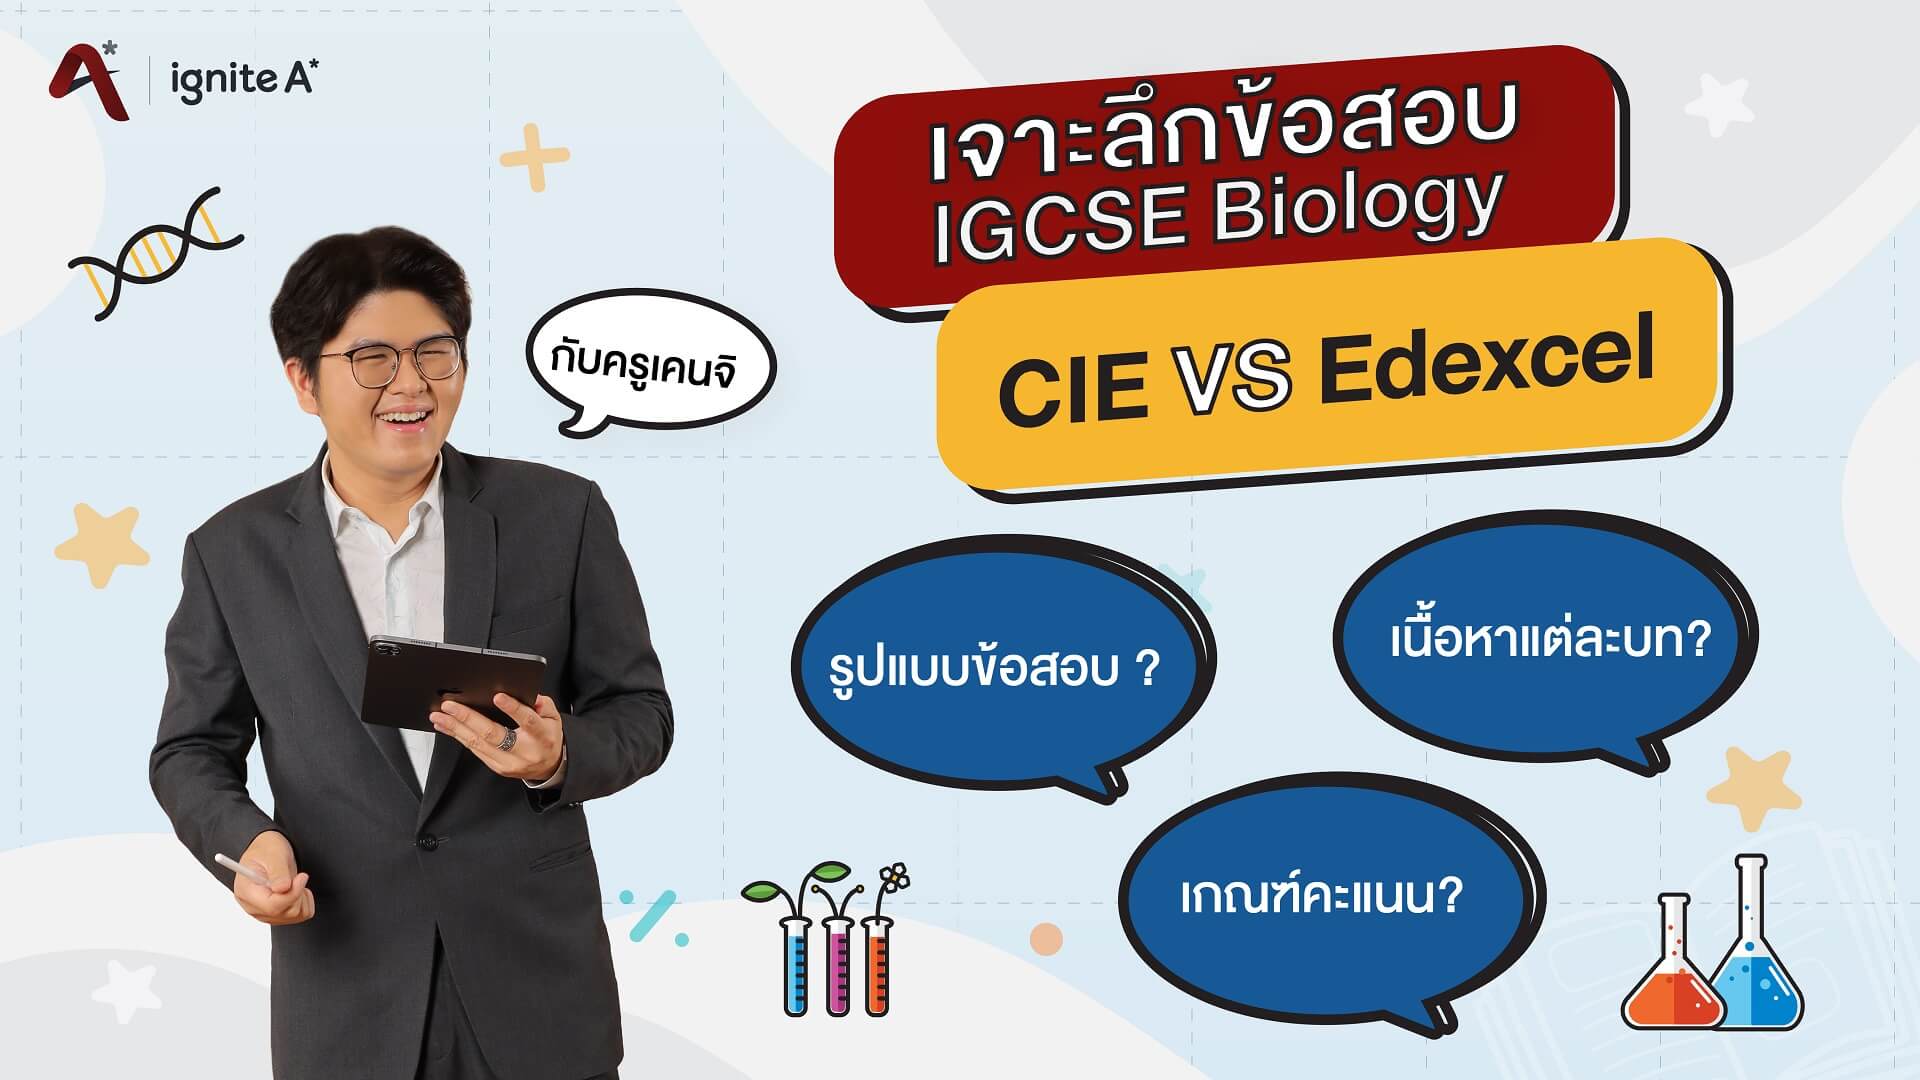 IGCSE by Kru Kenji, CIE vs Edexcel